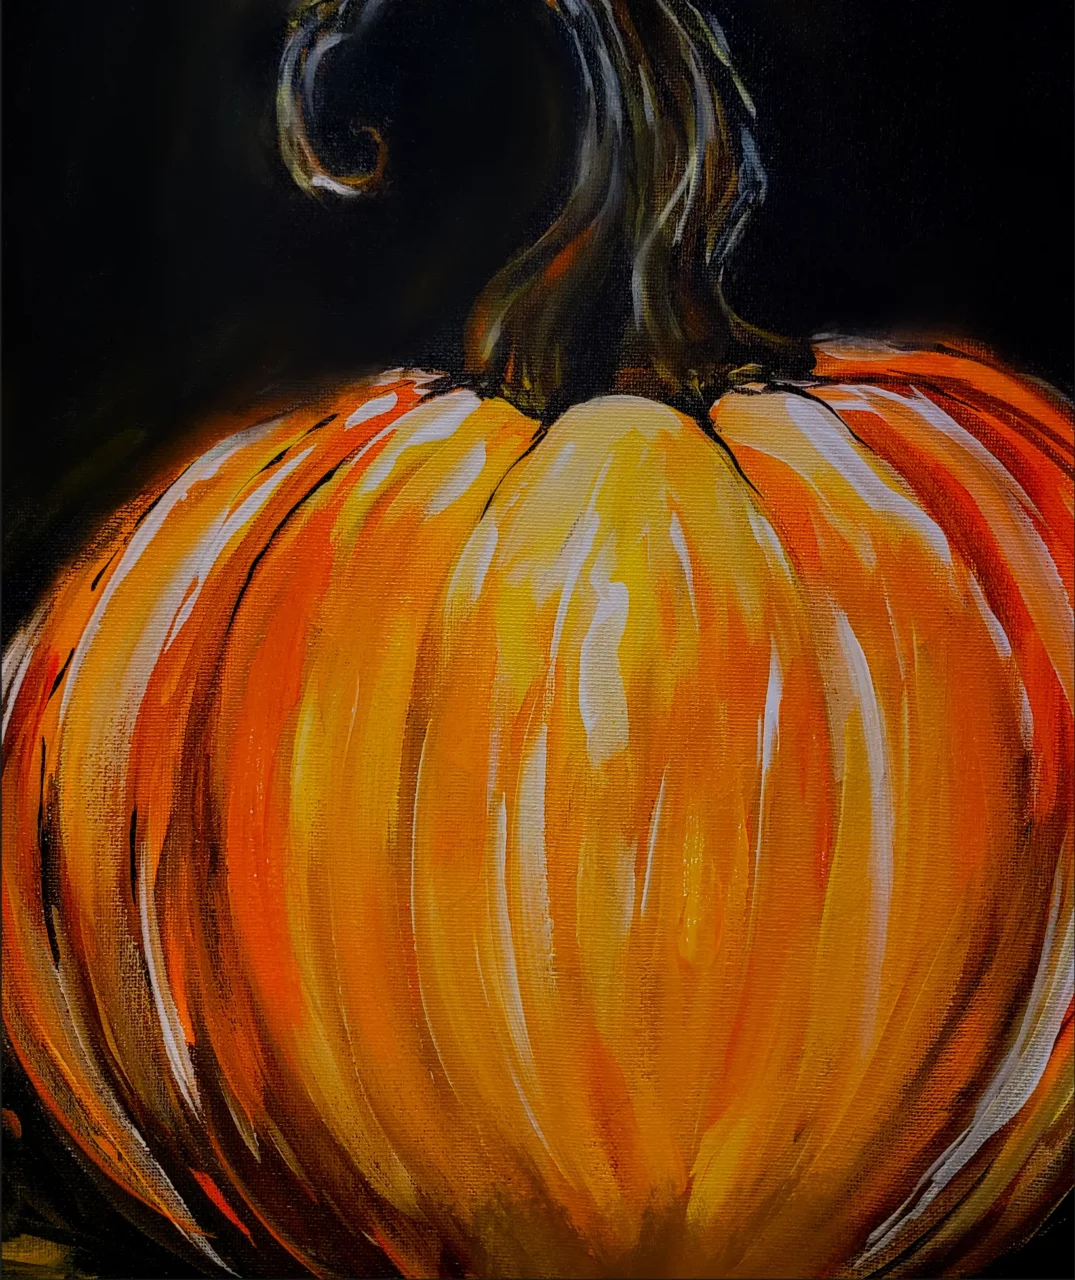 painting of a pumpkin